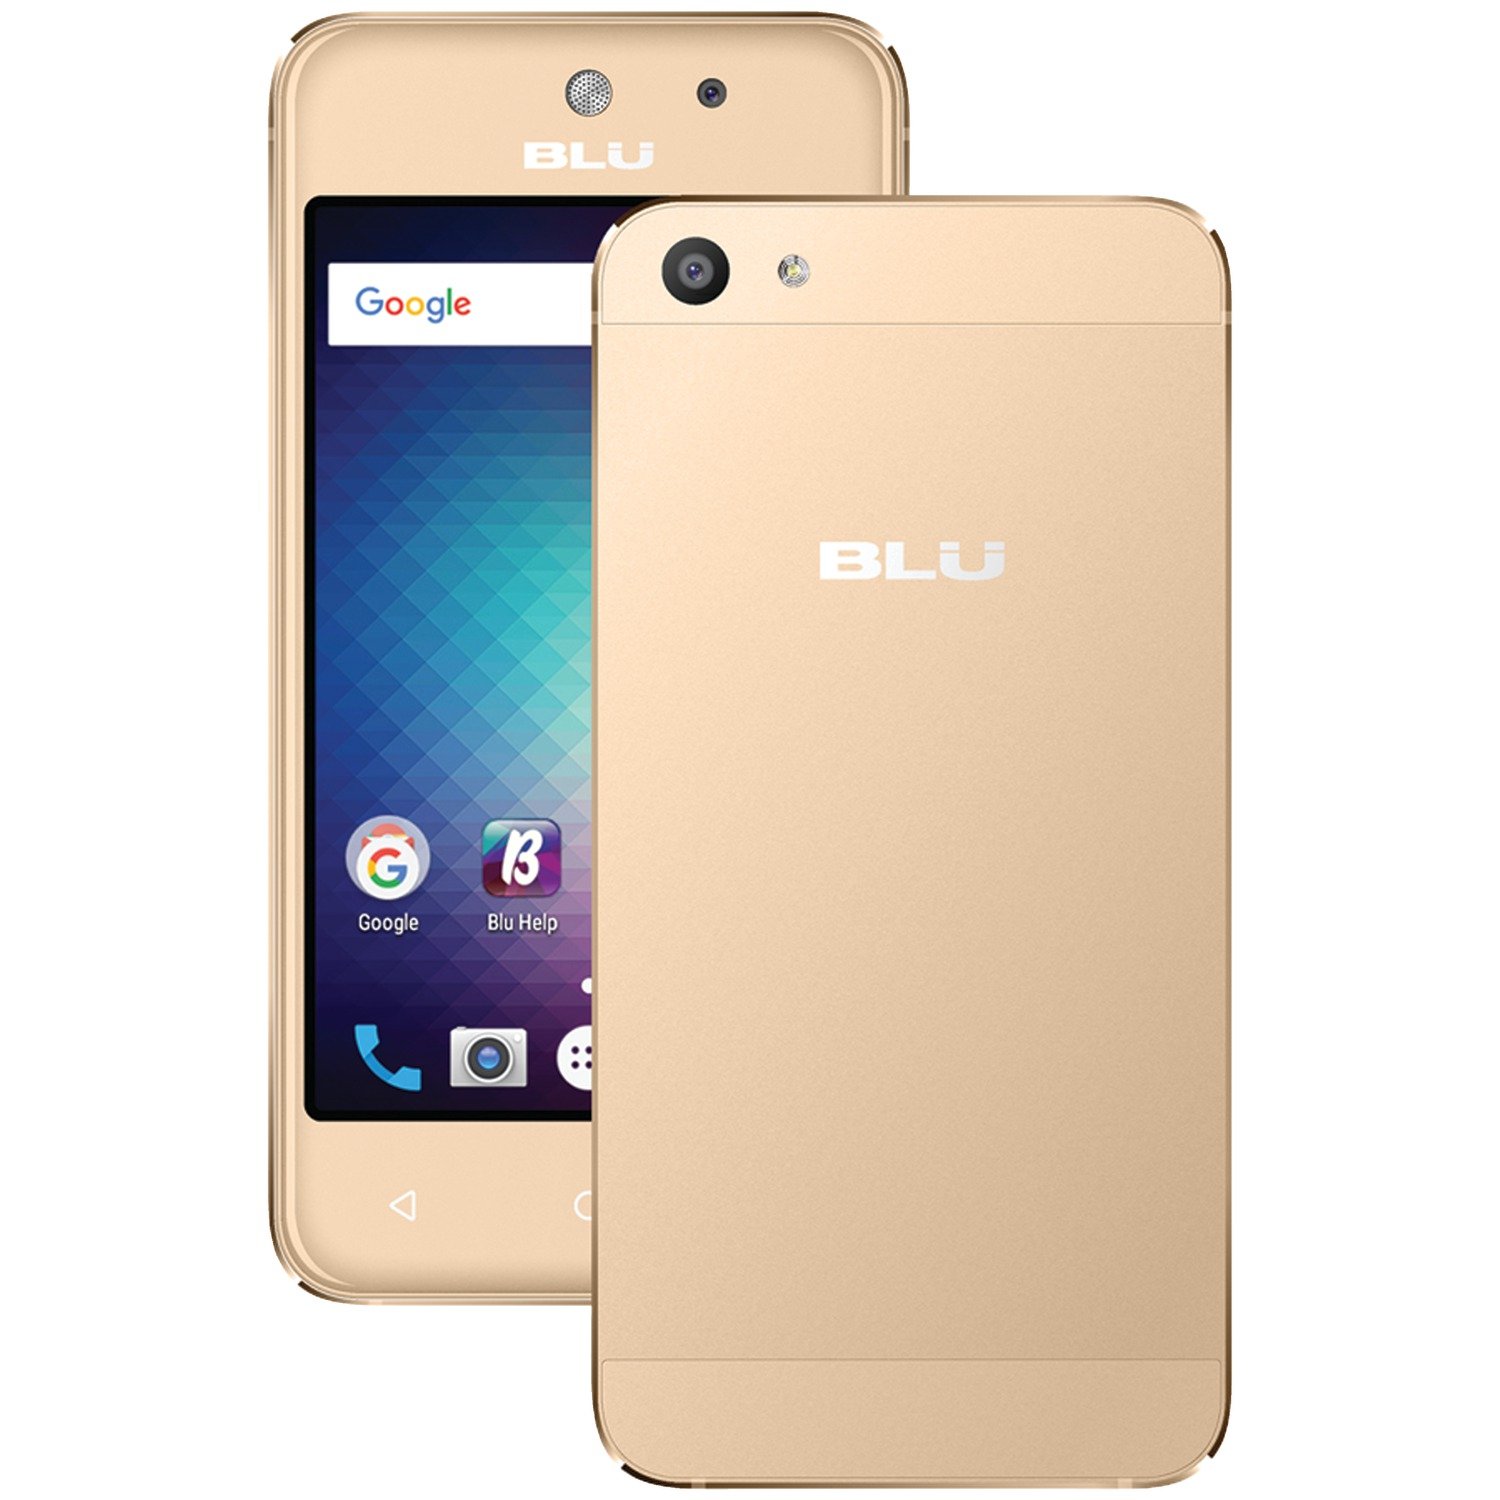 Celular Blu Vivo S Mini Gold - Celulares - dourado  - Central - unidade            Cod. CL BLU S GOLD